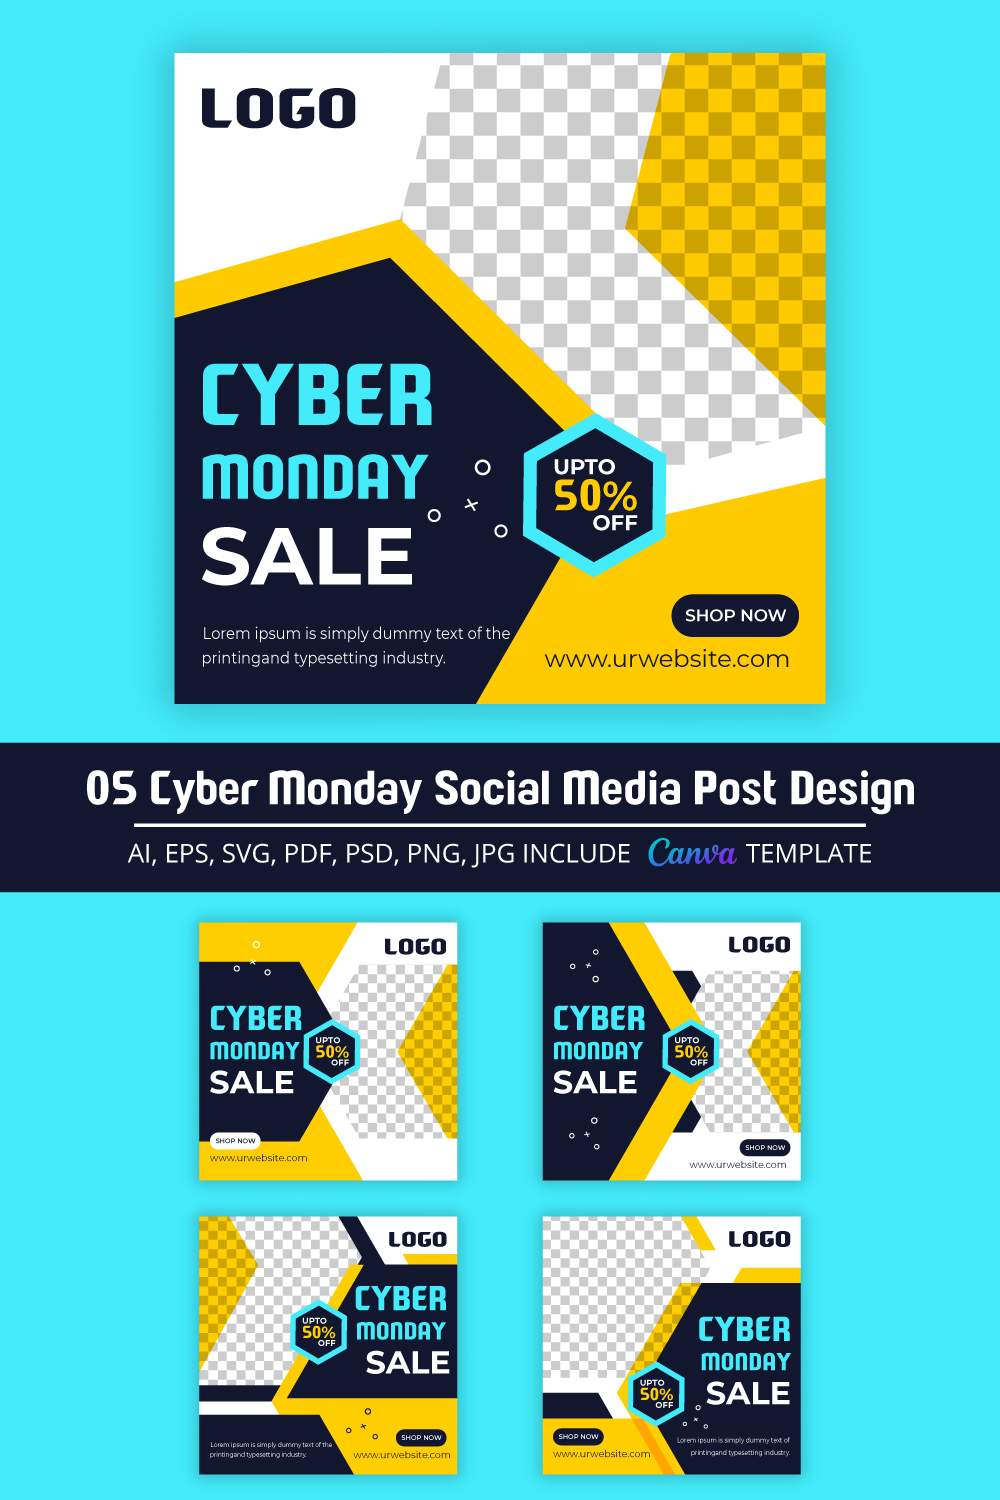 5 Cyber Monday Super Sale Social Media Post Template Pack Vol-01 pinterest image.